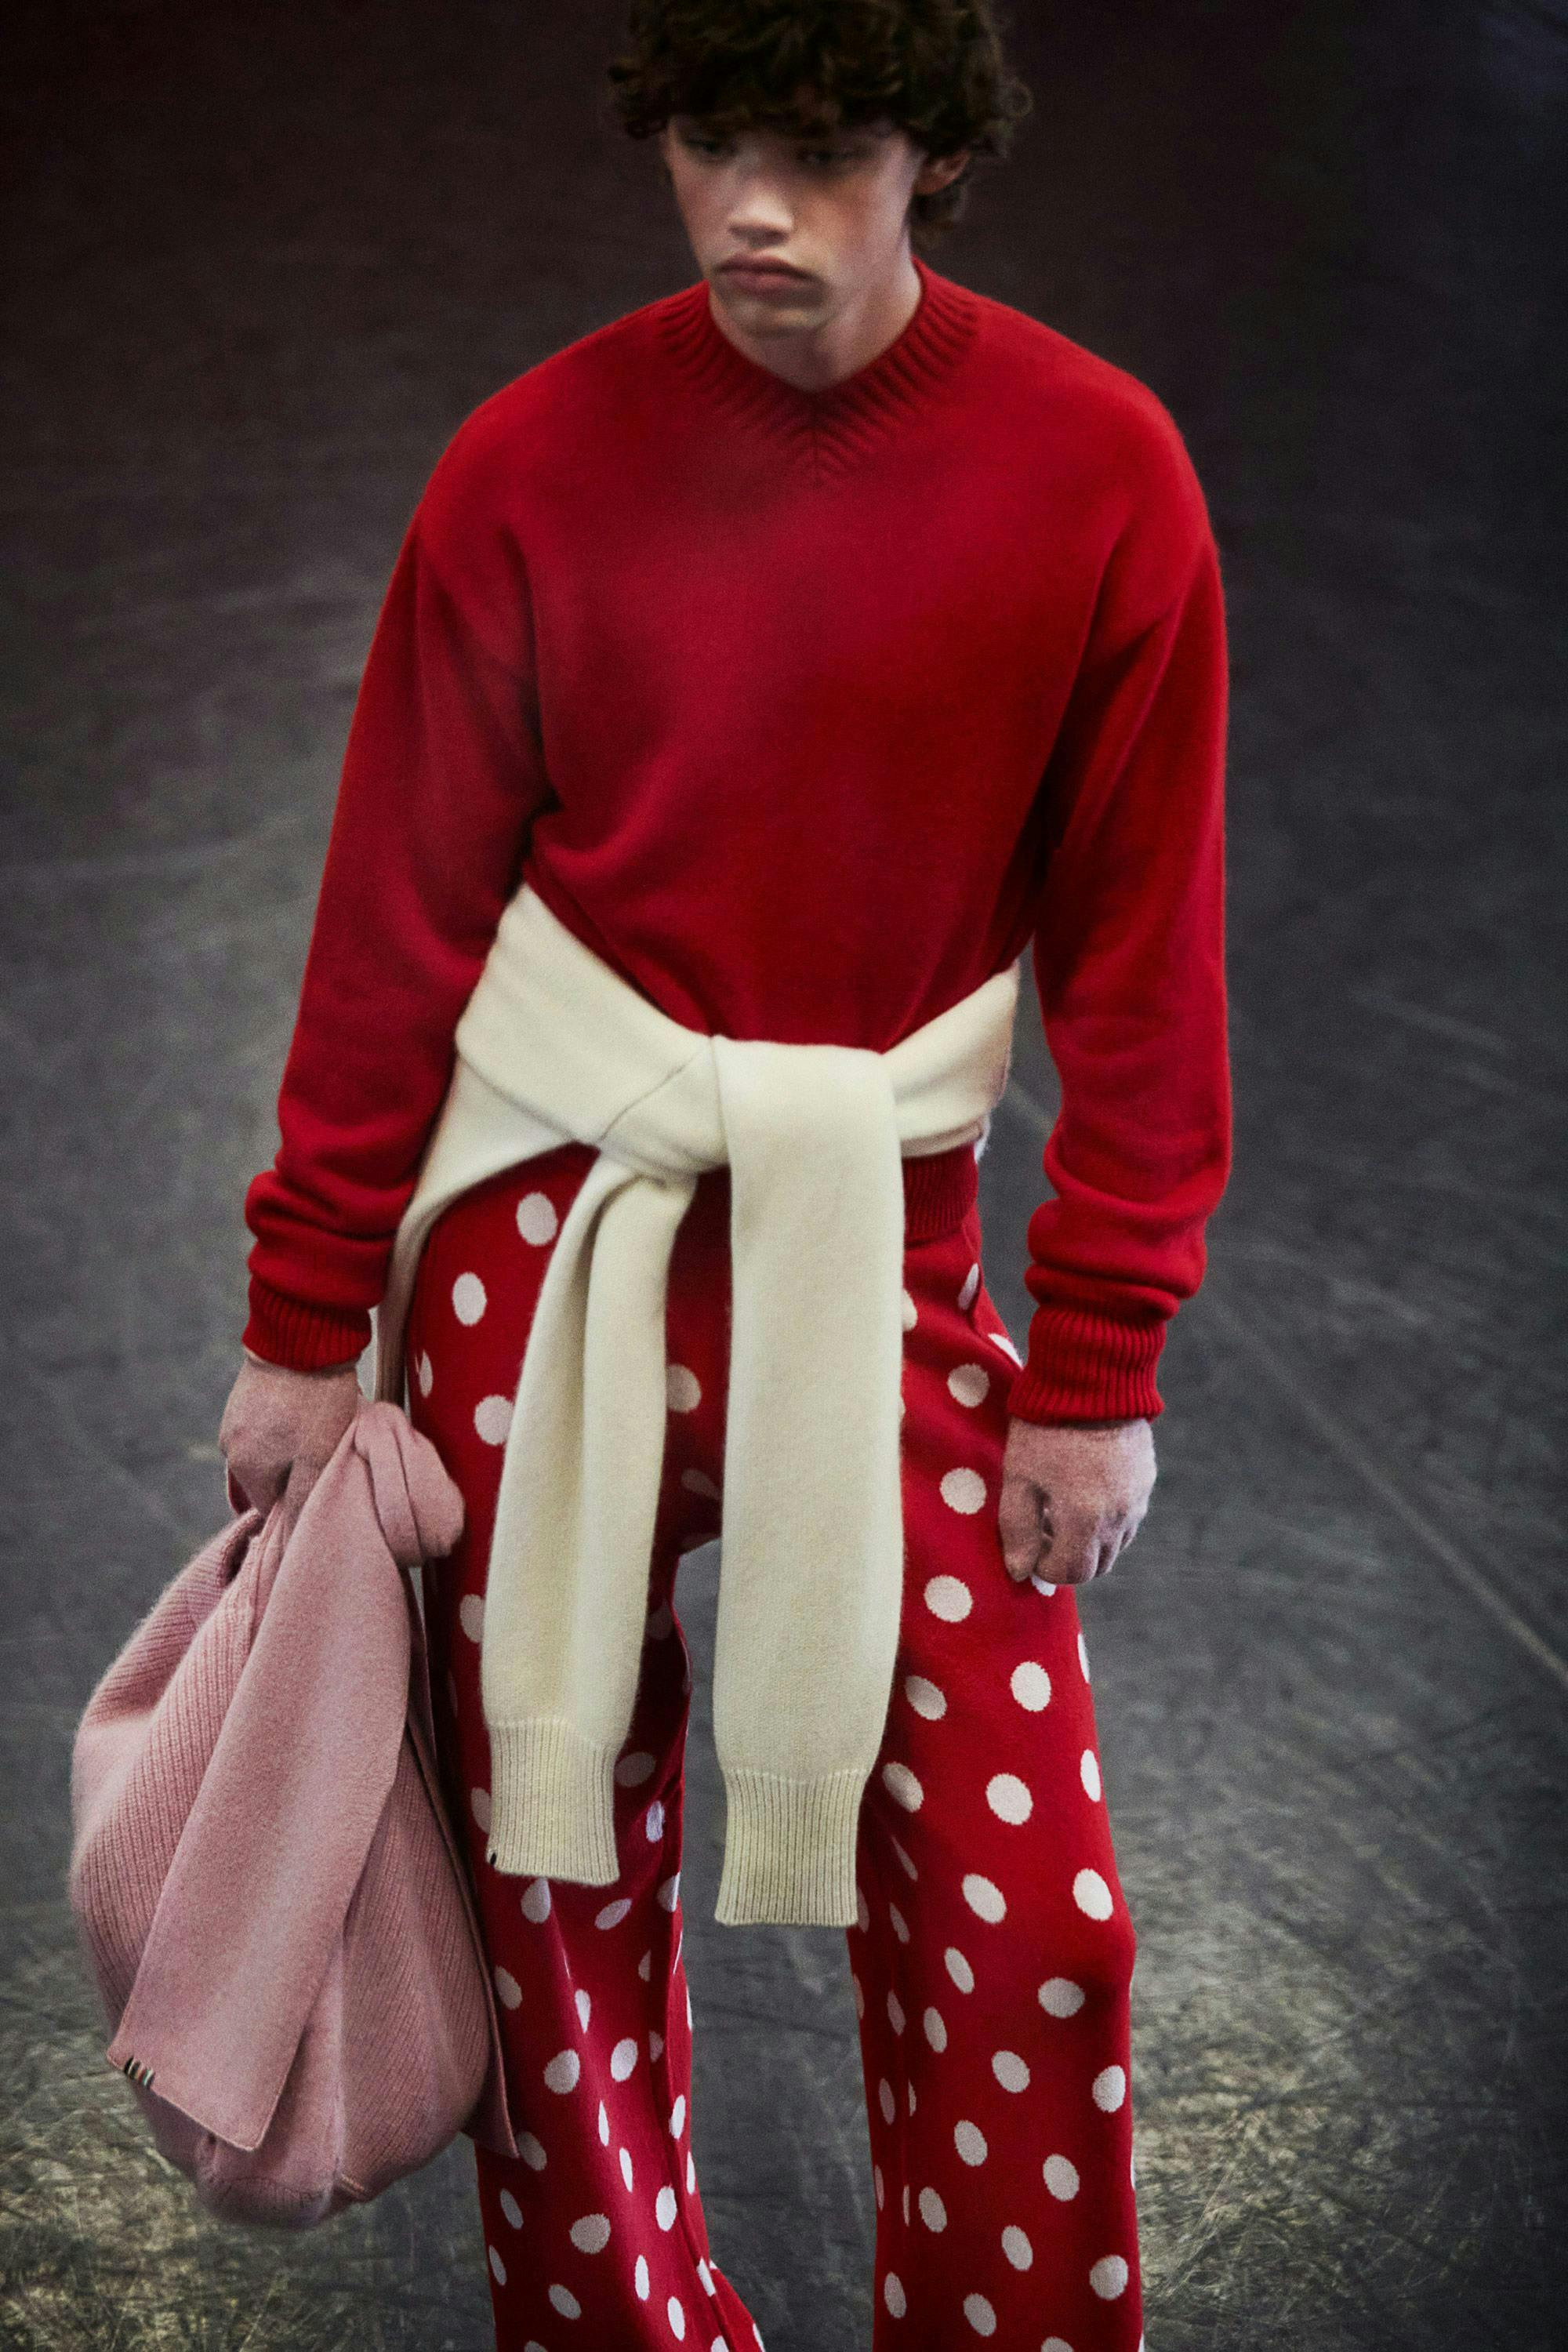 handbag bag accessories purse pattern sweater knitwear clothing person fashion